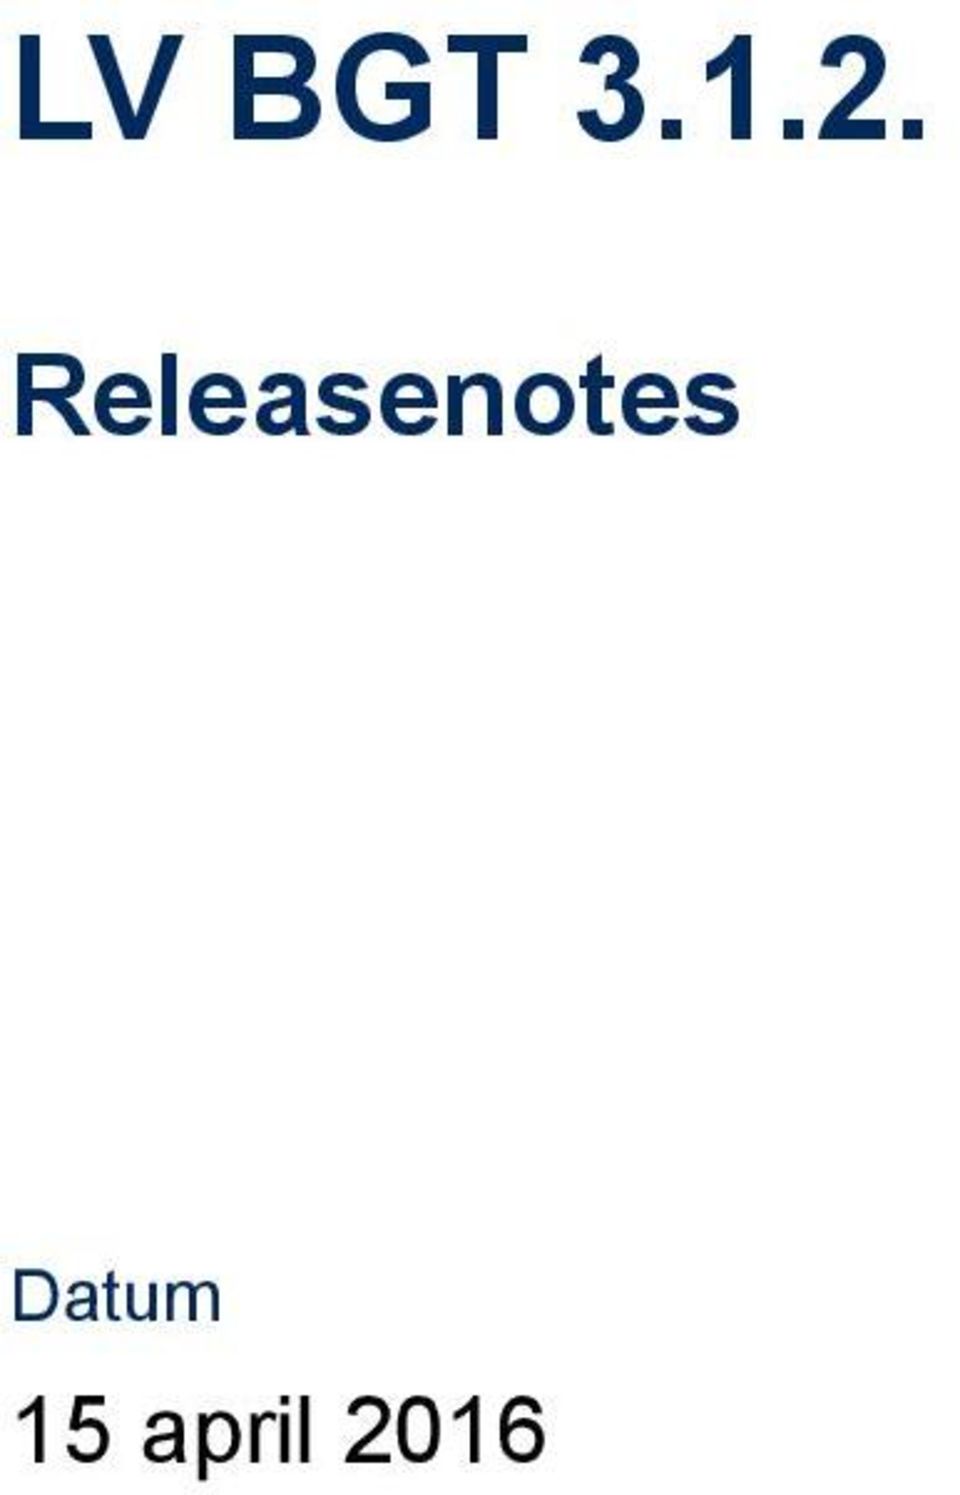 Releasenotes